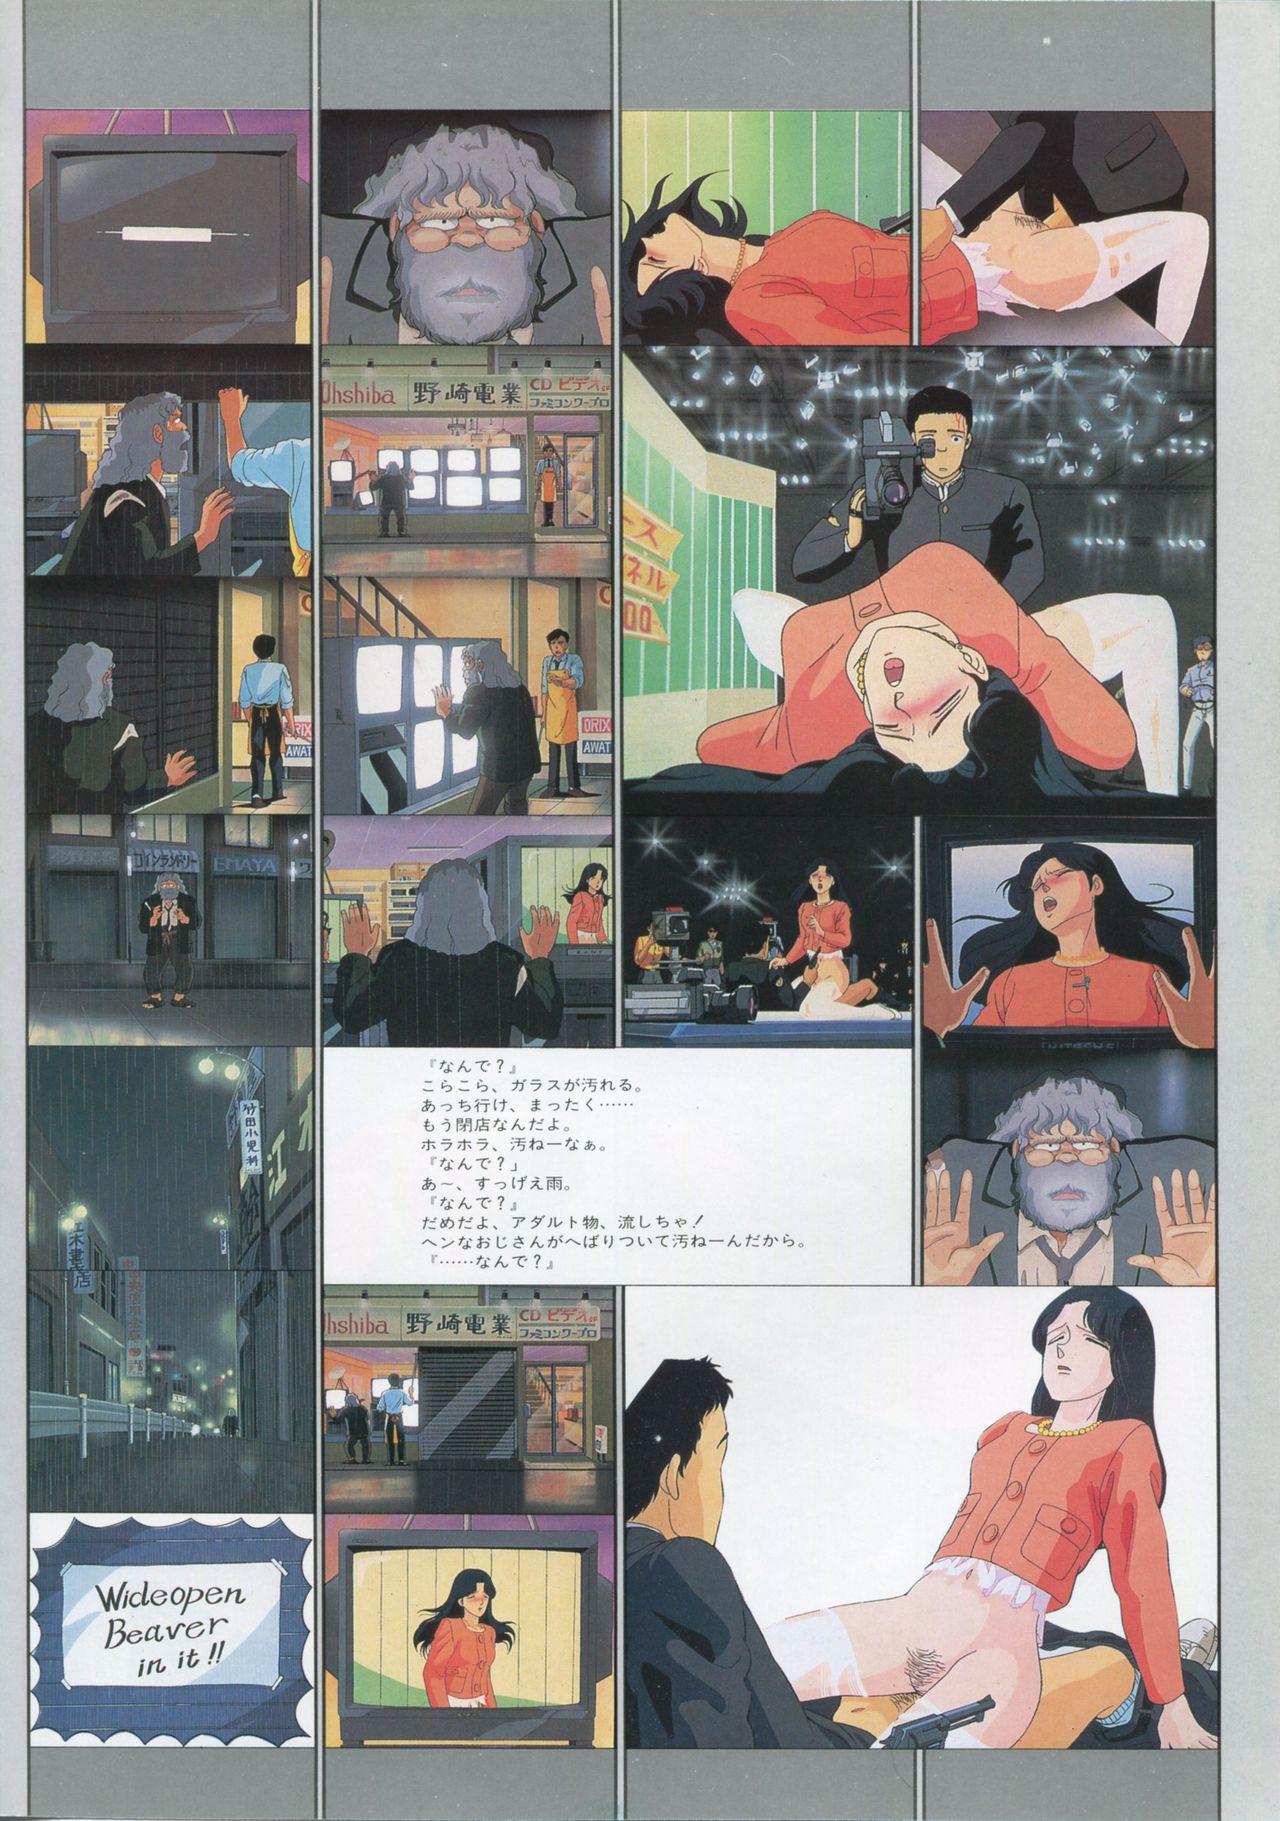 Bishoujo Anime Daizenshuu - Adult Animation Video Catalog 1991 35